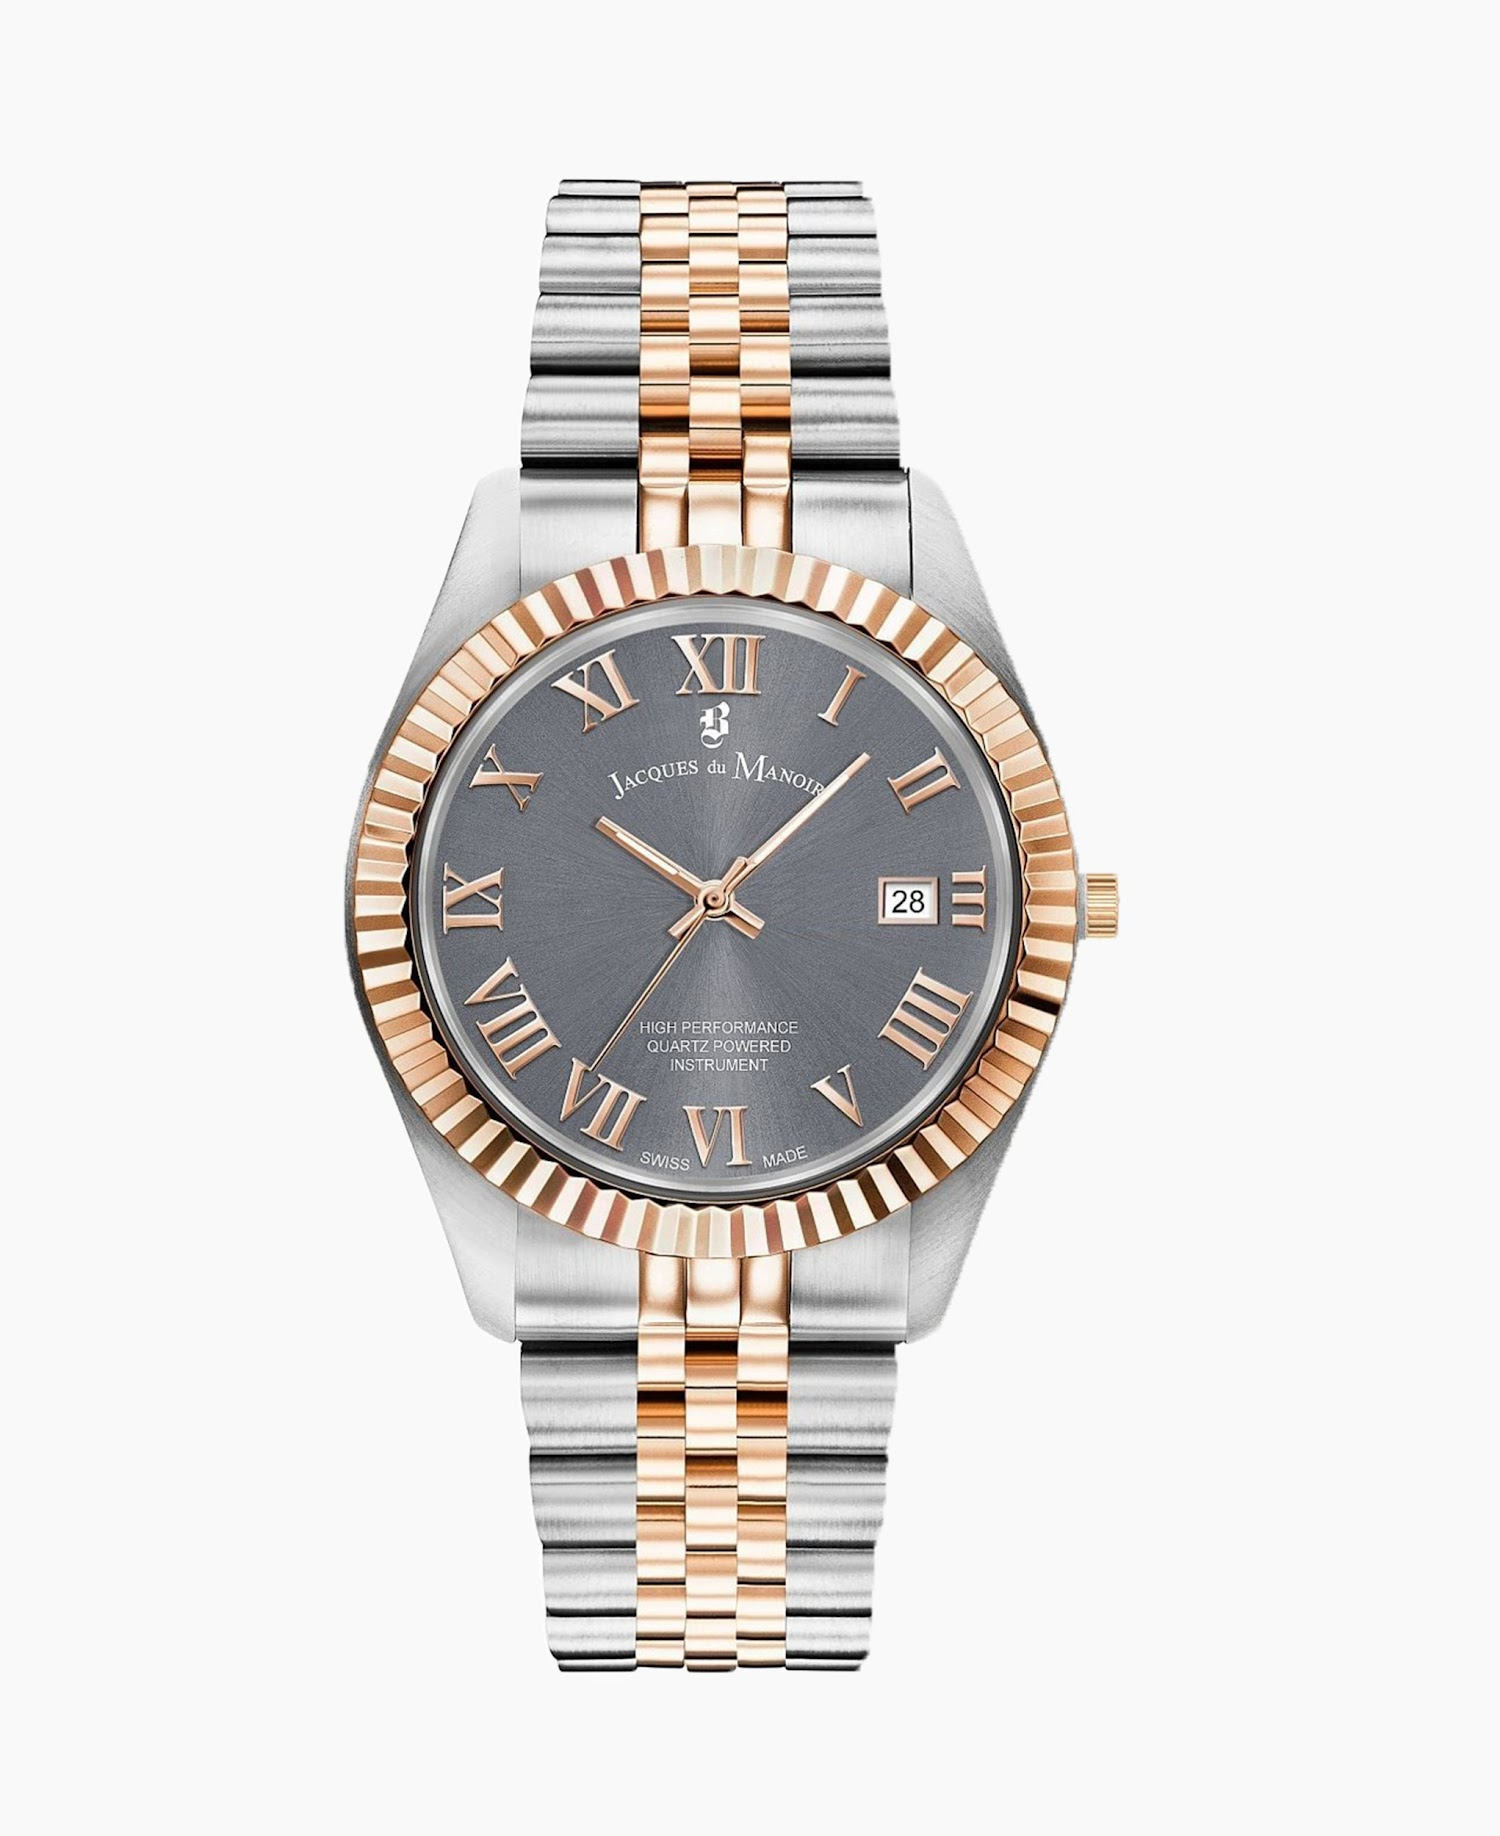 Jaques Du Manoir - JWG00603 - Inspiration Series - Swiss Made Wrist Watch For Men 5ATM